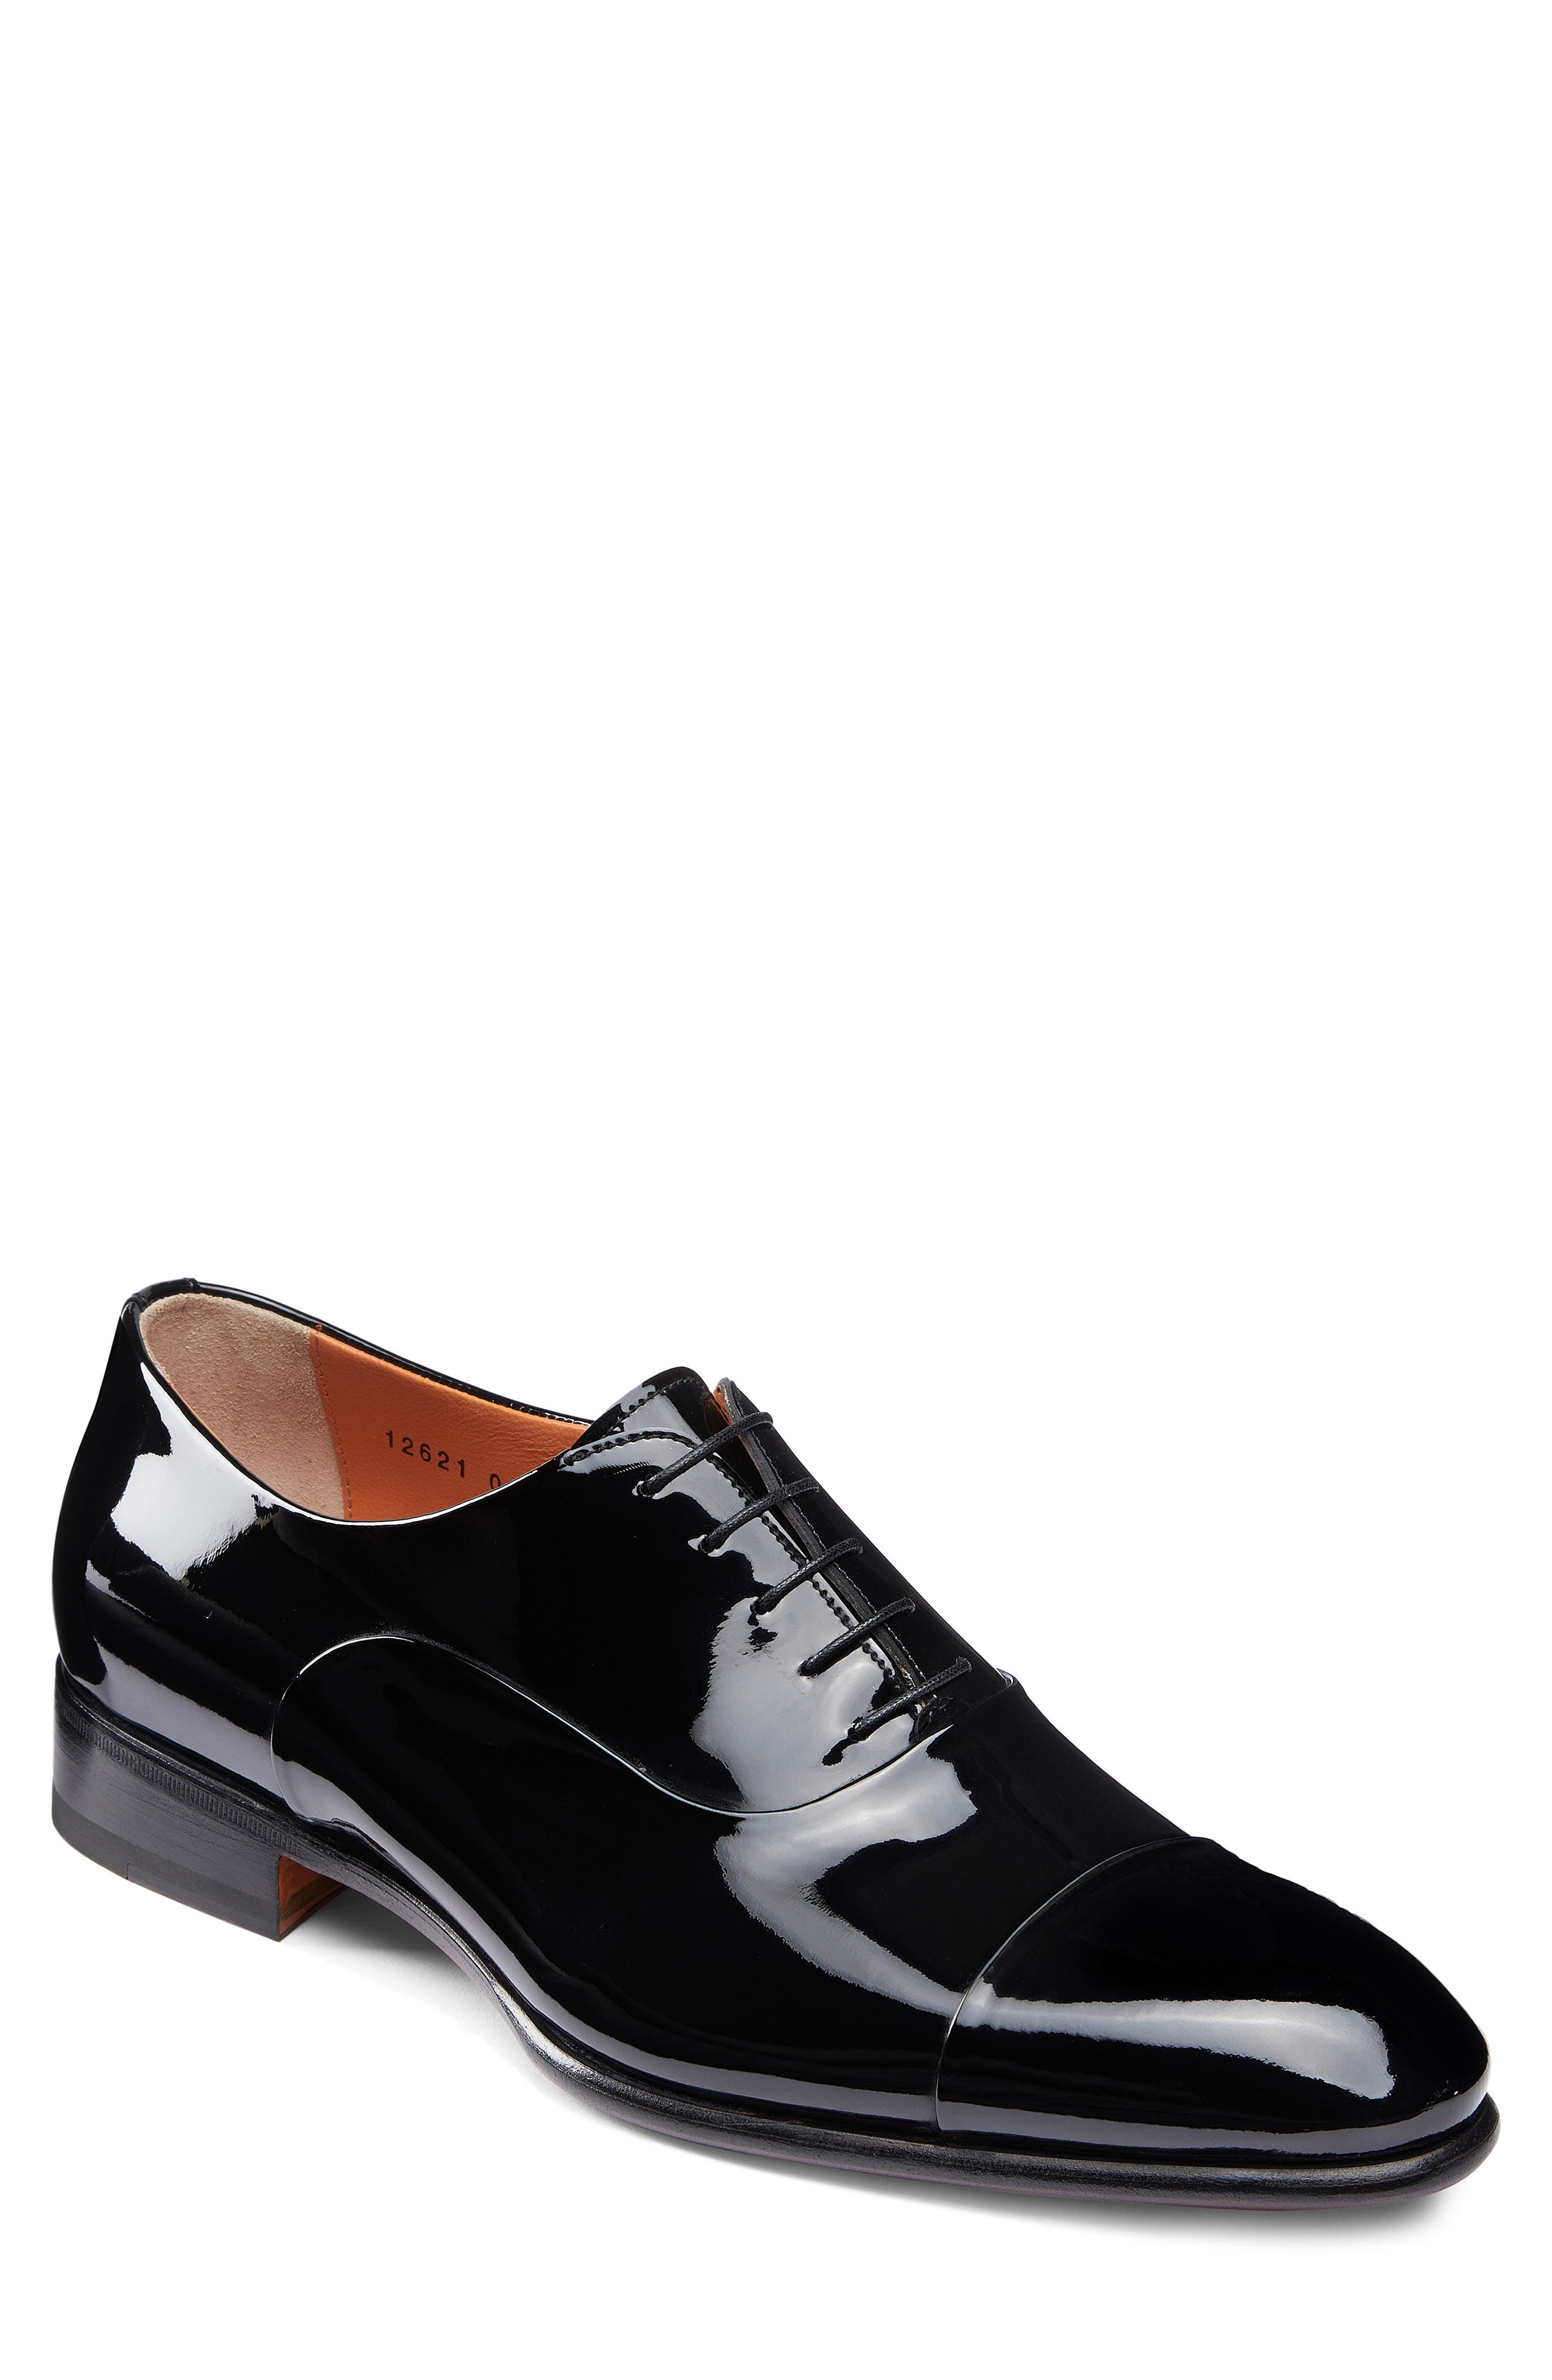 Mens Tuxedo Shoes \u0026 Formal Shoes 